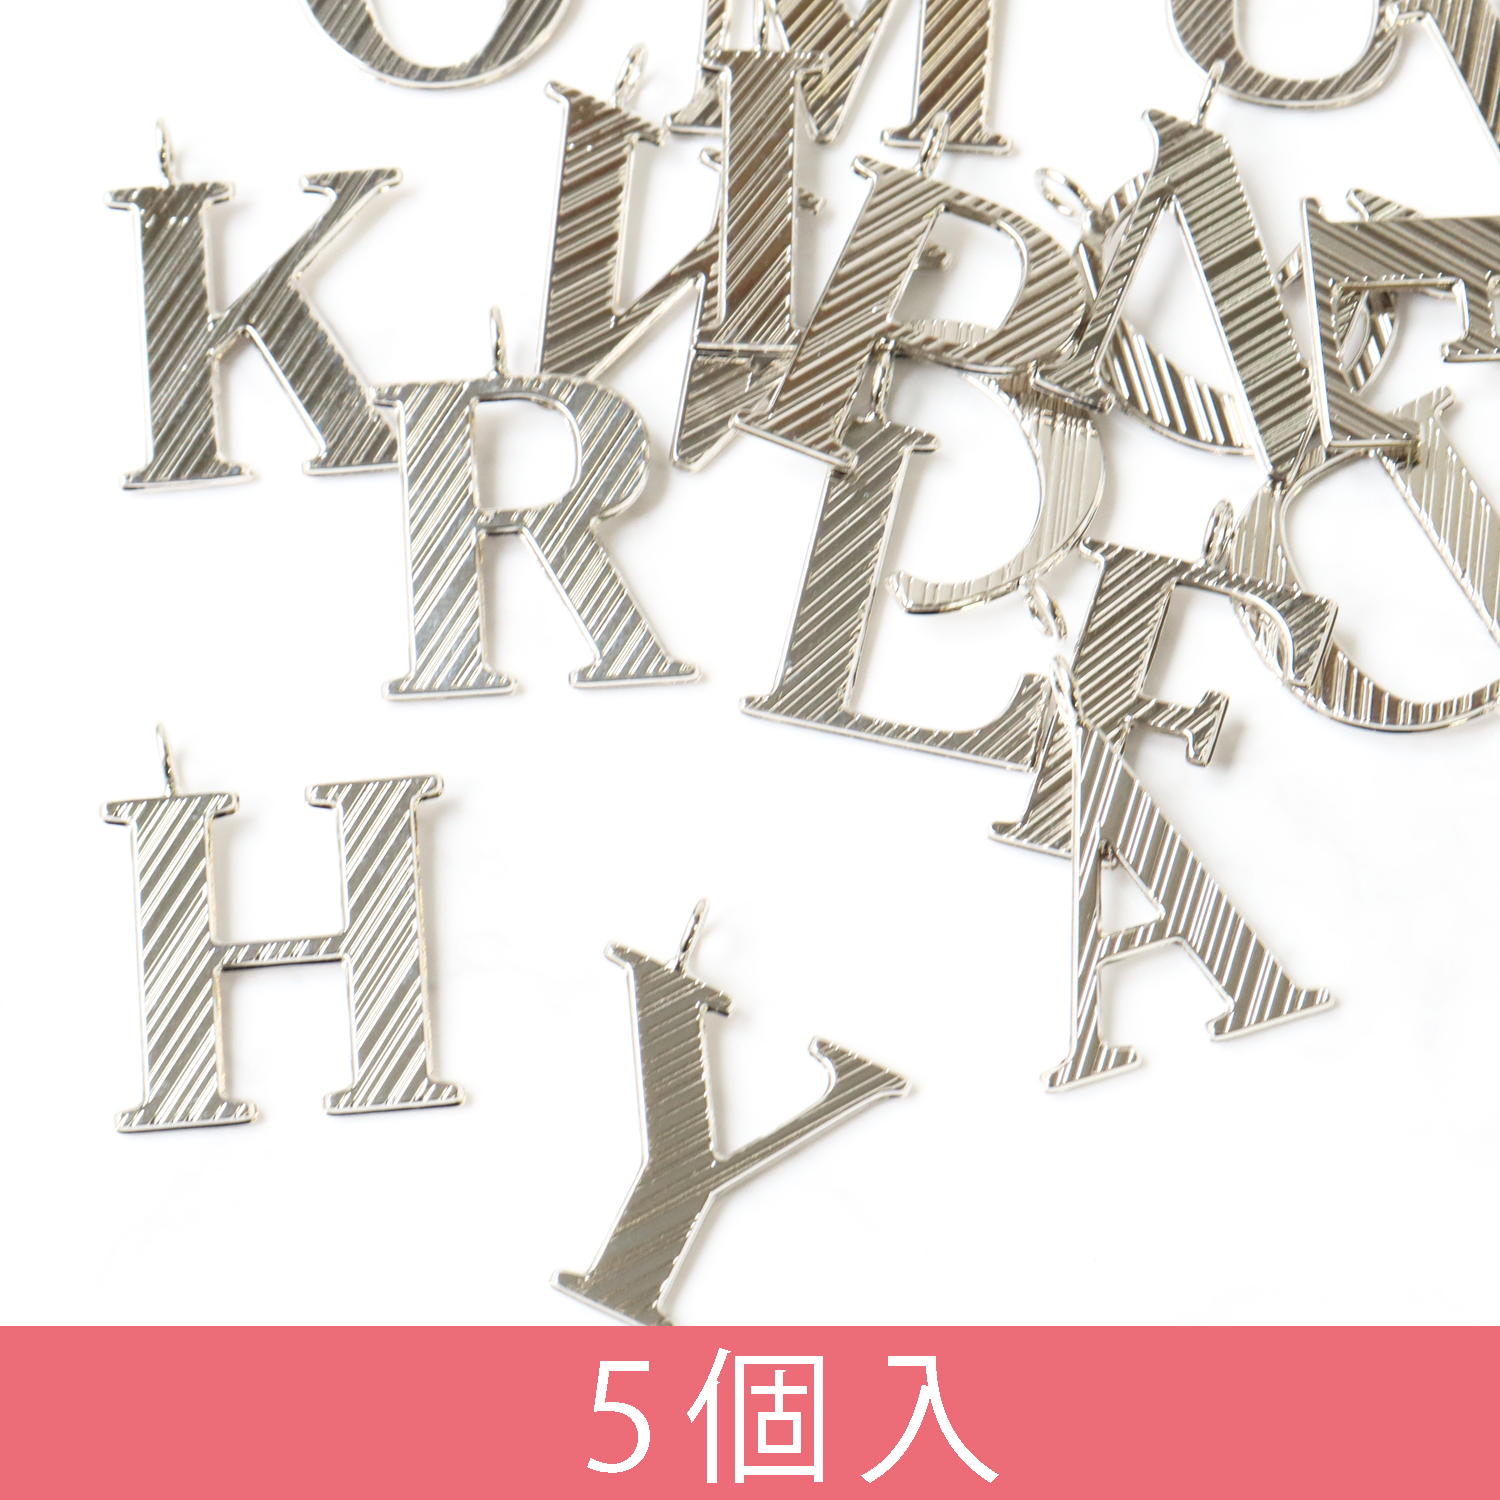 KK10-5-S アルファベットチャーム シルバー 5個入 (袋)